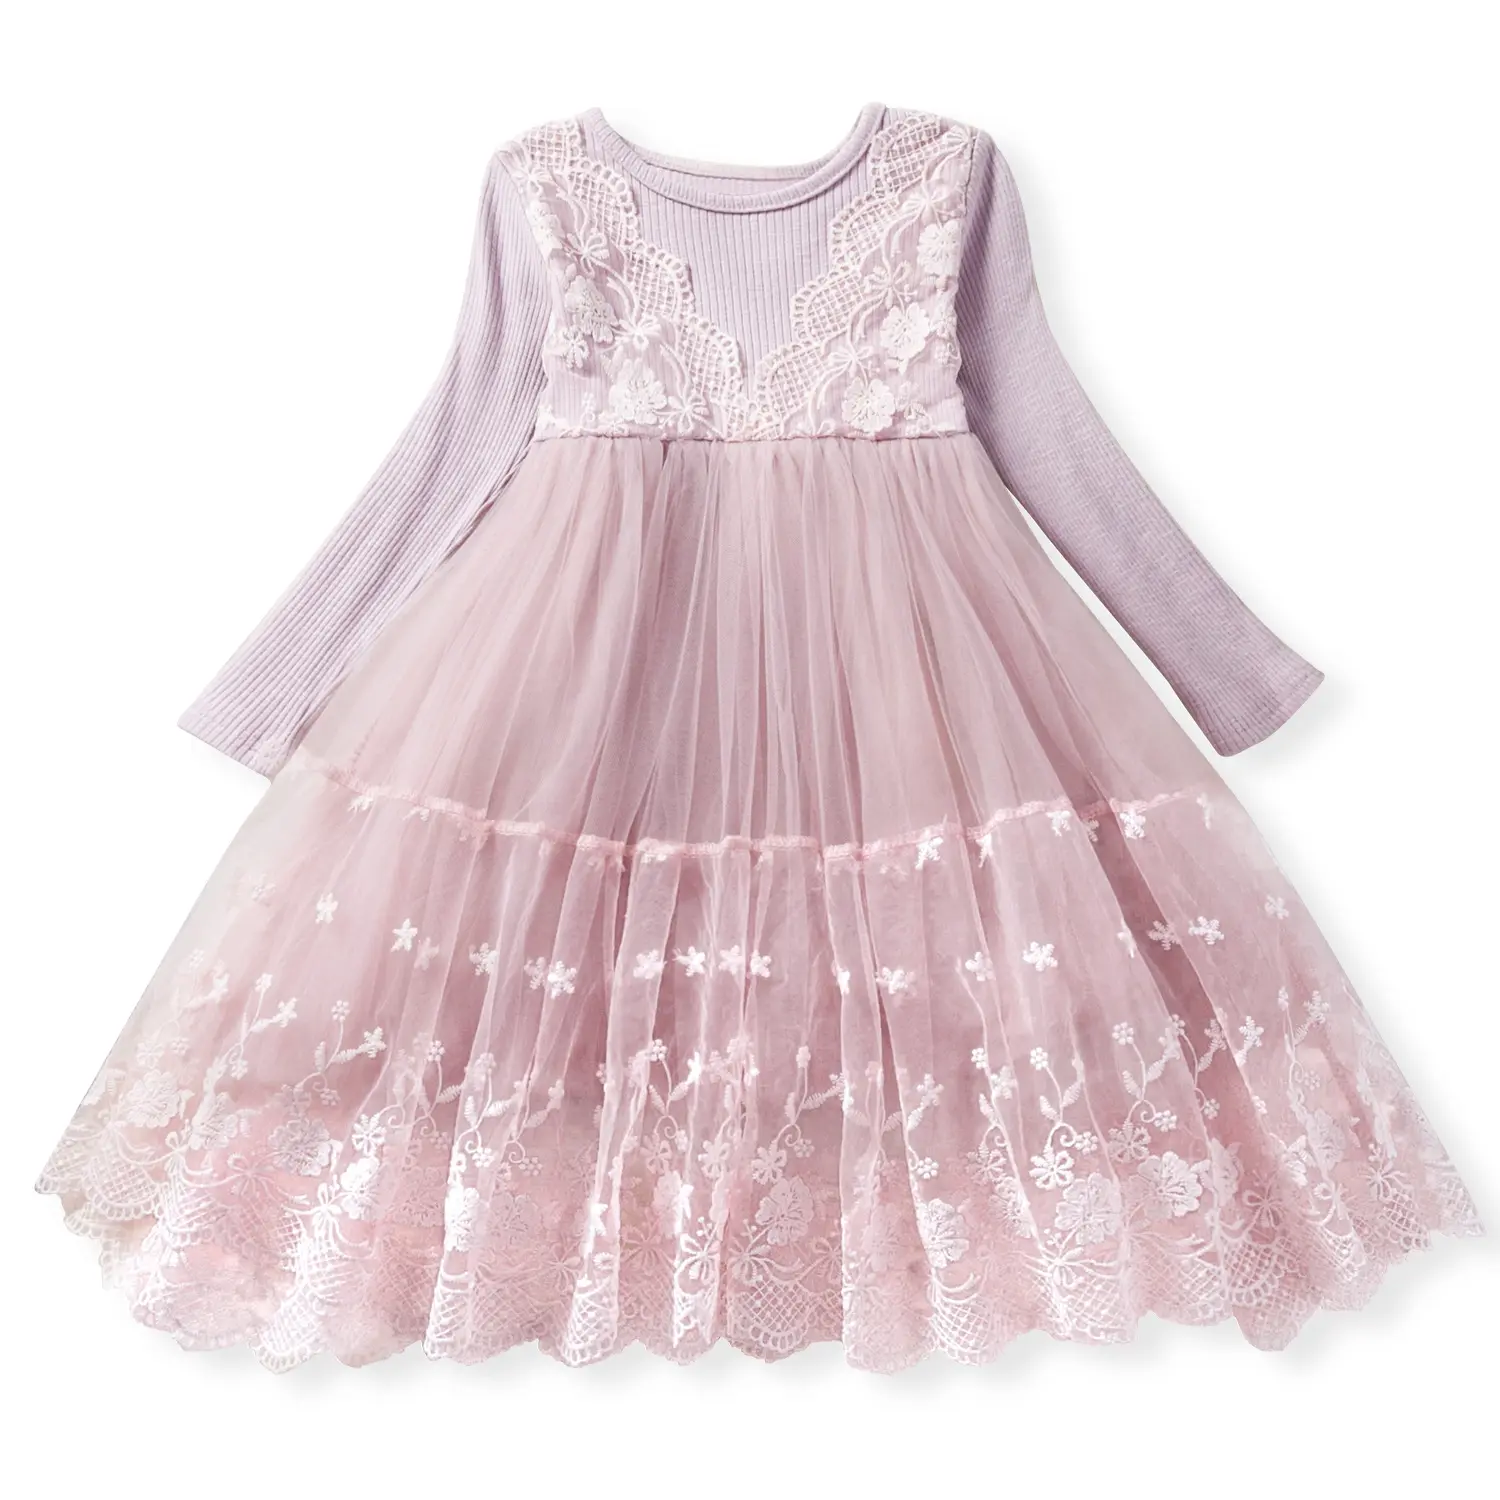 Spring Fall Children's Dress Girl Sweet Fashion Cotton Lace Long Sleeve Princess Dresses 2-6 Y Girl dress Kids Clothing